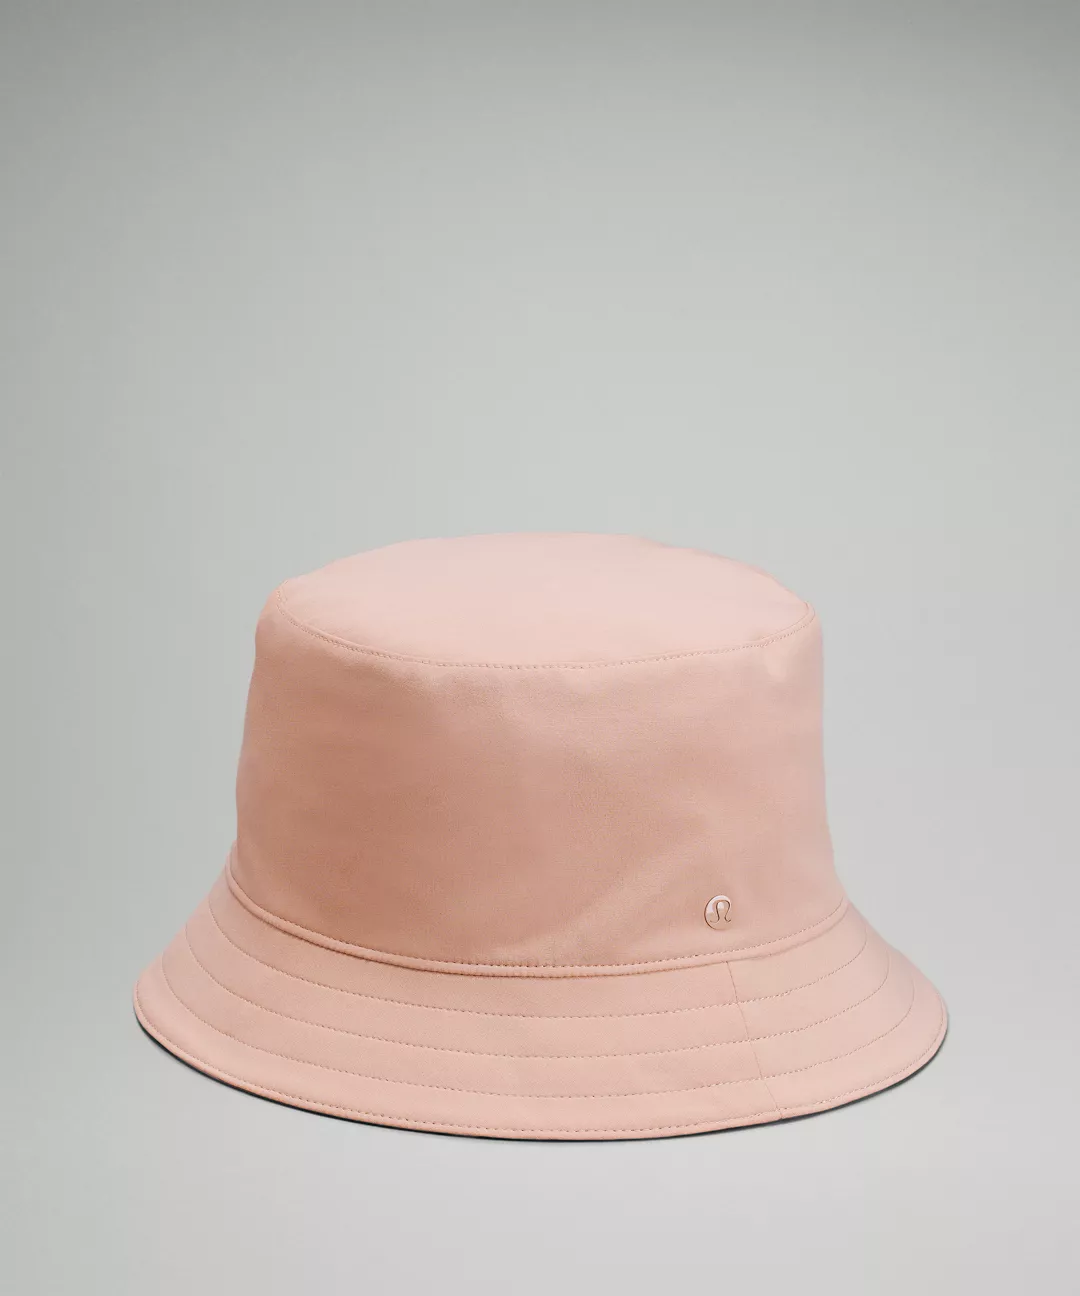 A lululemon Both Ways Reversible Bucket Hat